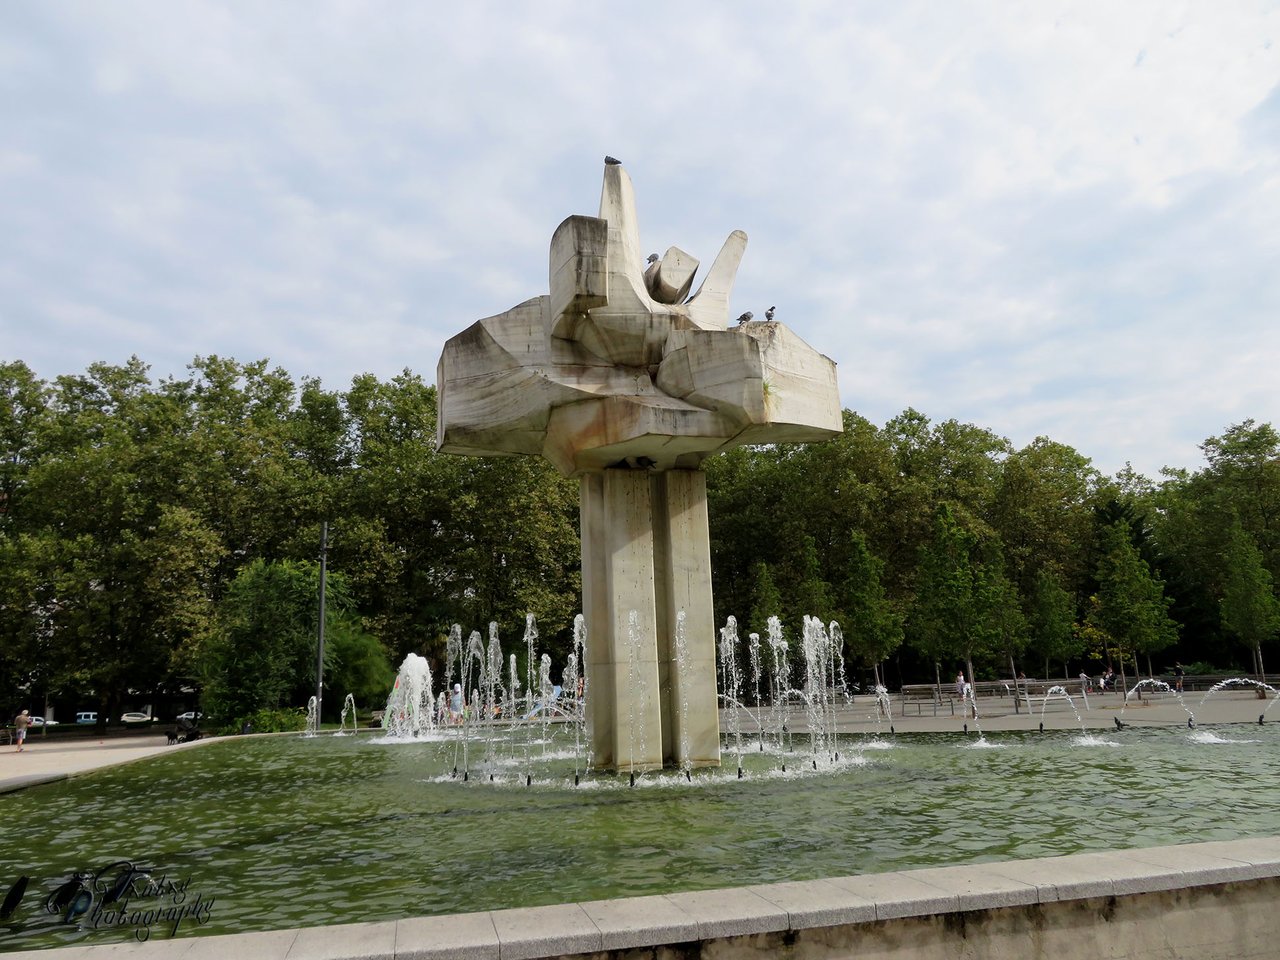 José Noja is the author of the sculpture and ornamental fountain in the Plaza de La Constitución